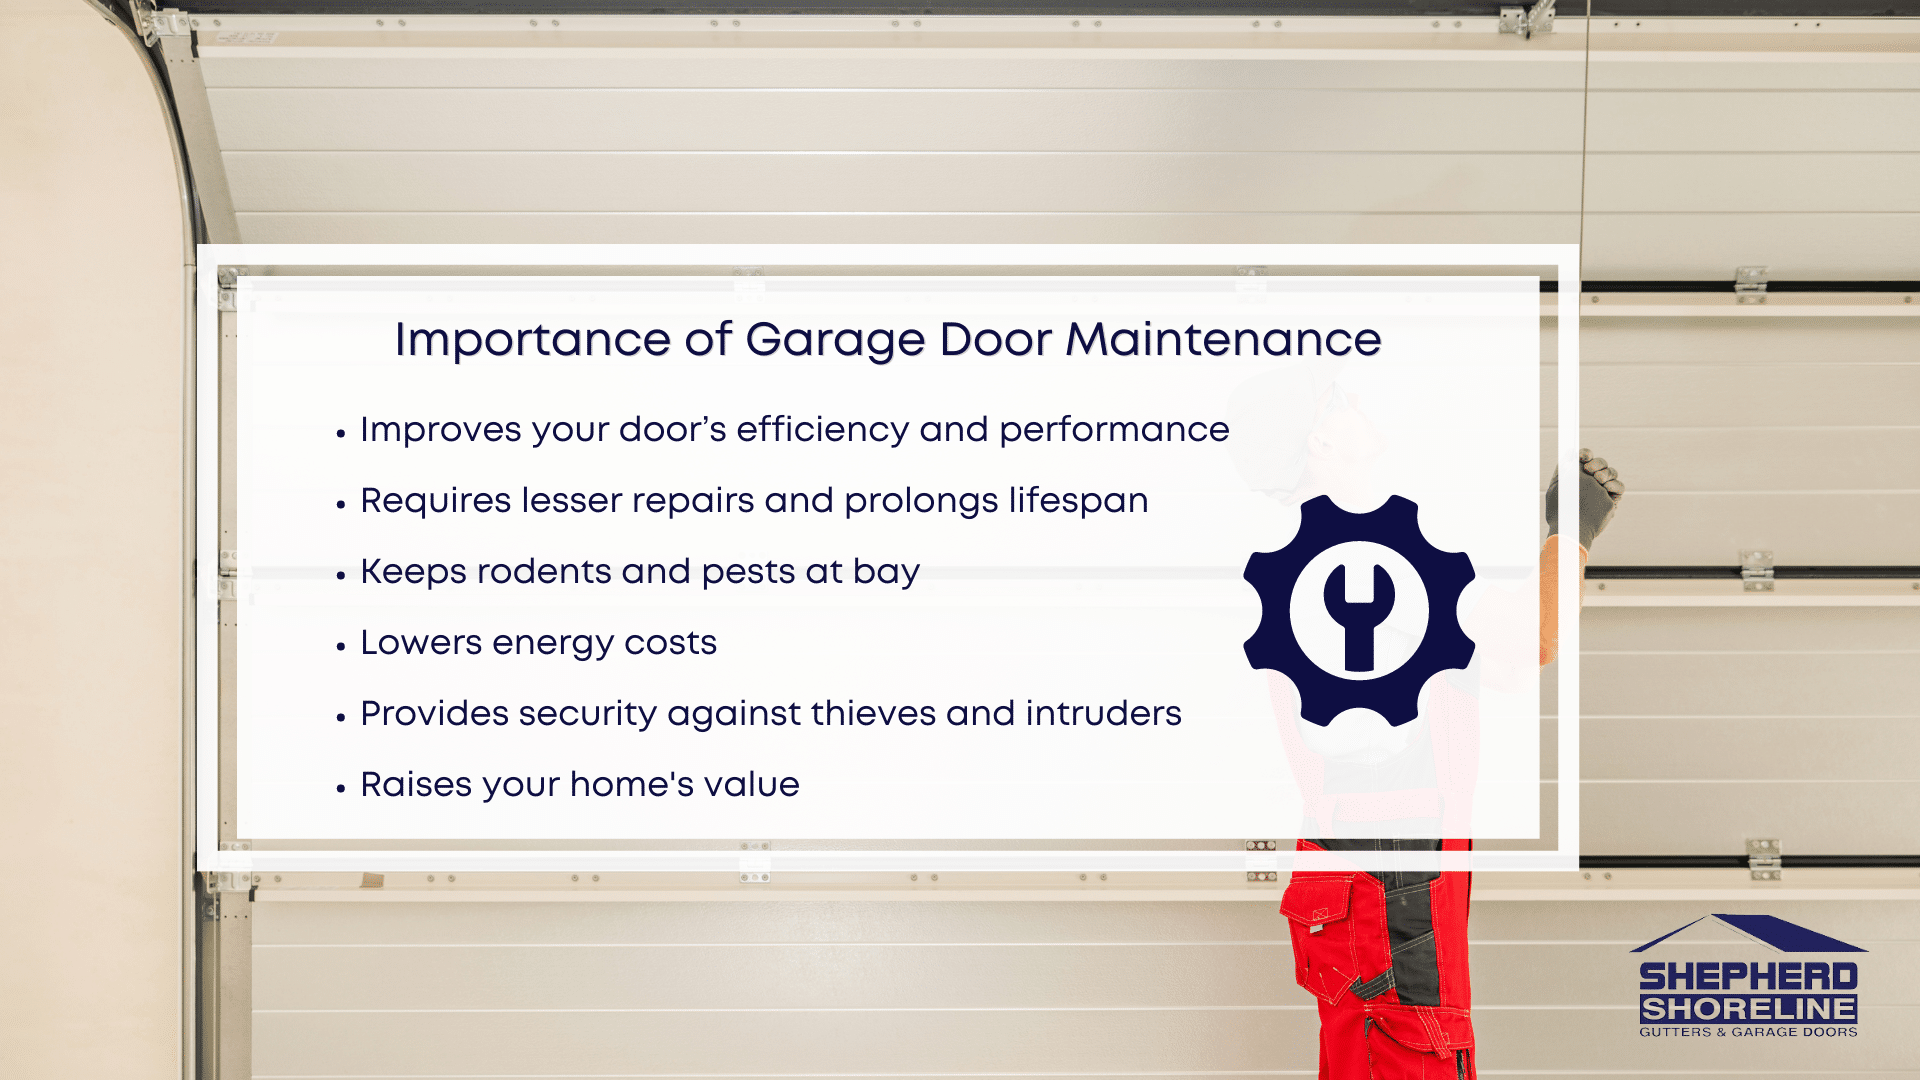 Infographic image of the importance of garage door maintenance